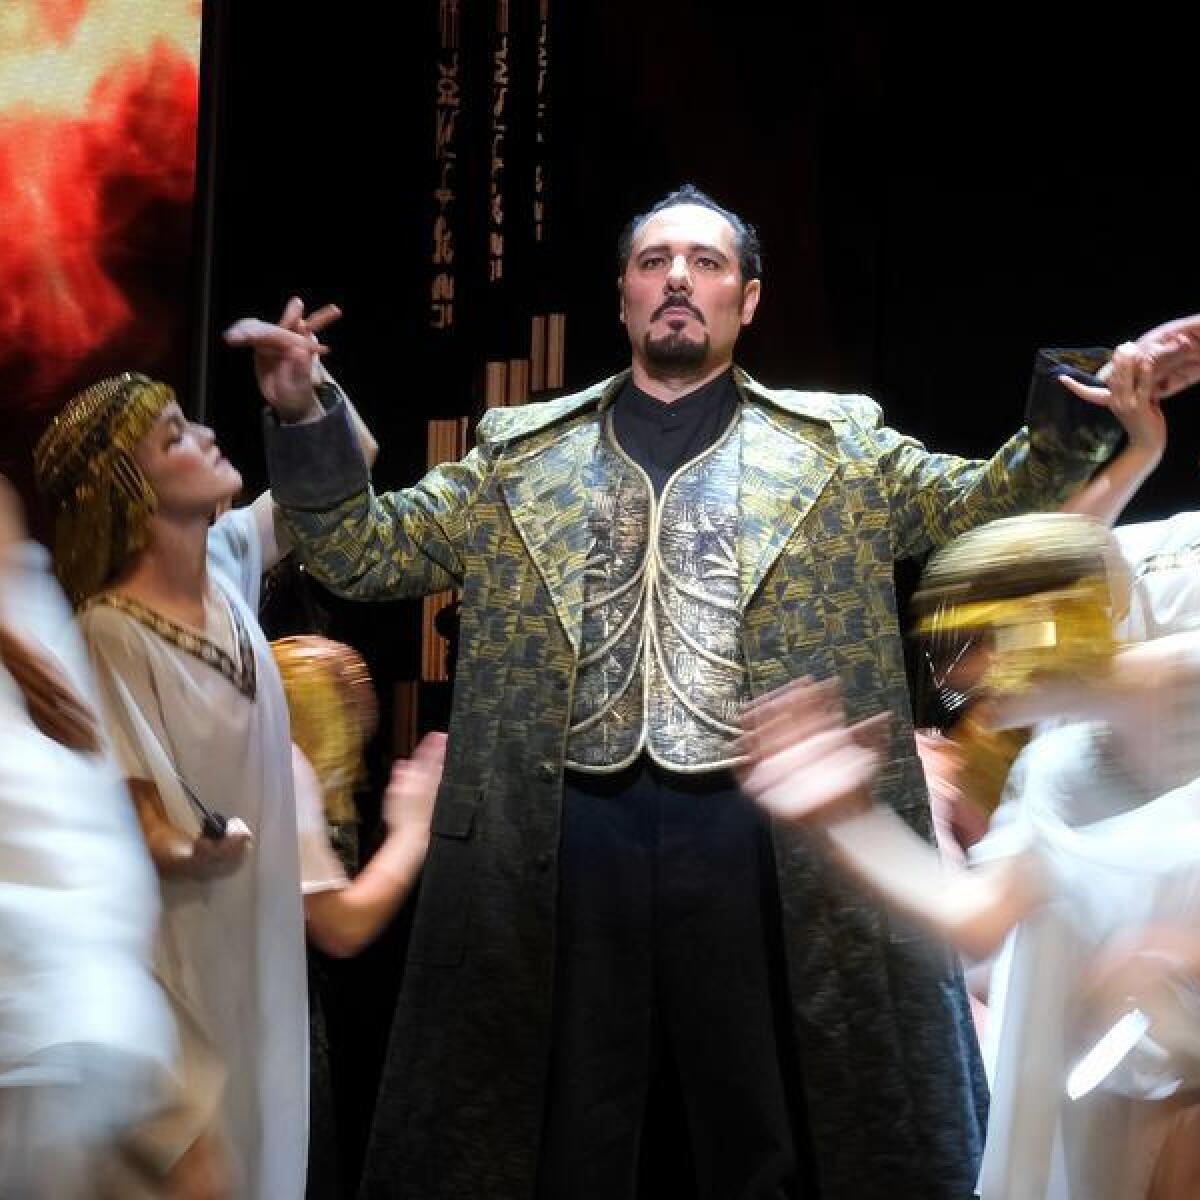 Opera Australia's production of Aida